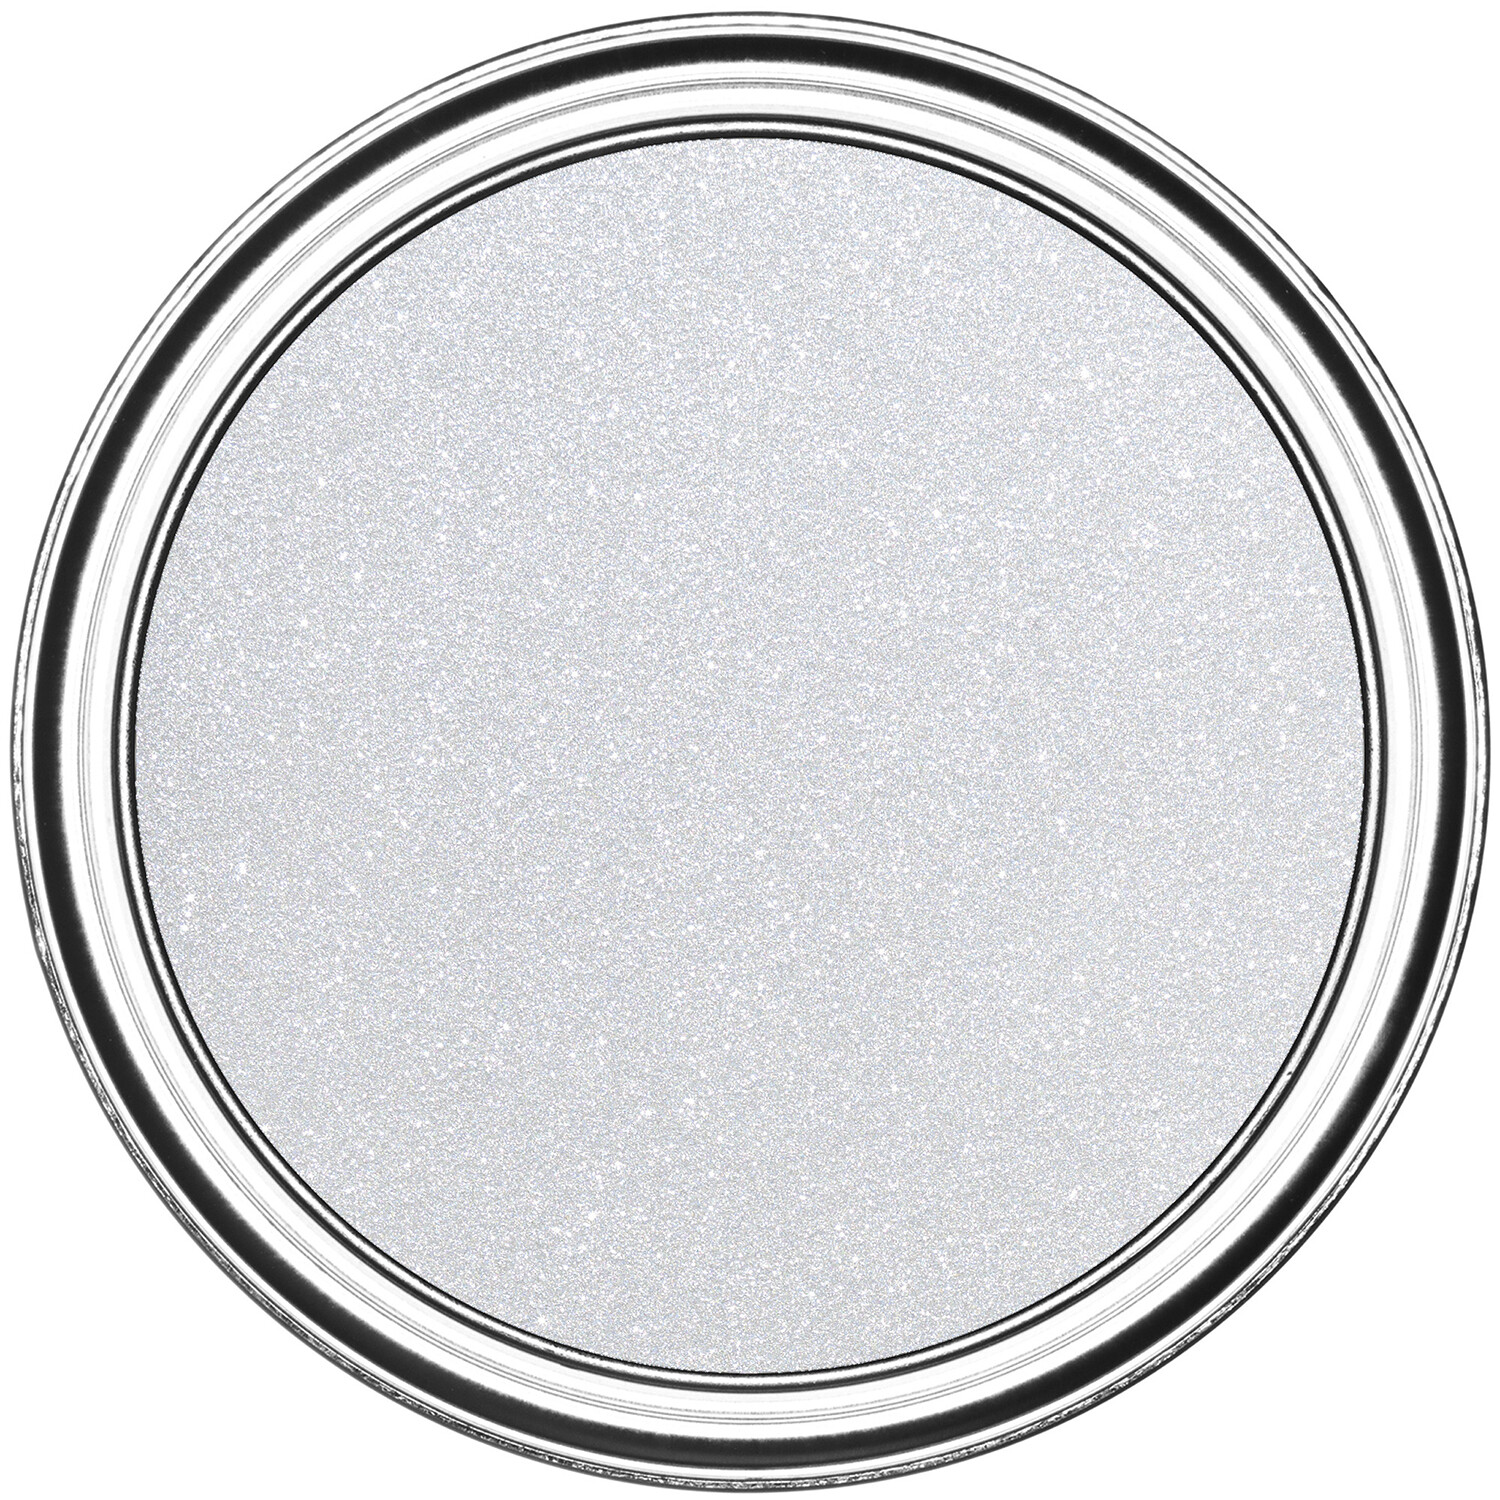 Rust-Oleum Silver Glitter Pouch Image 4